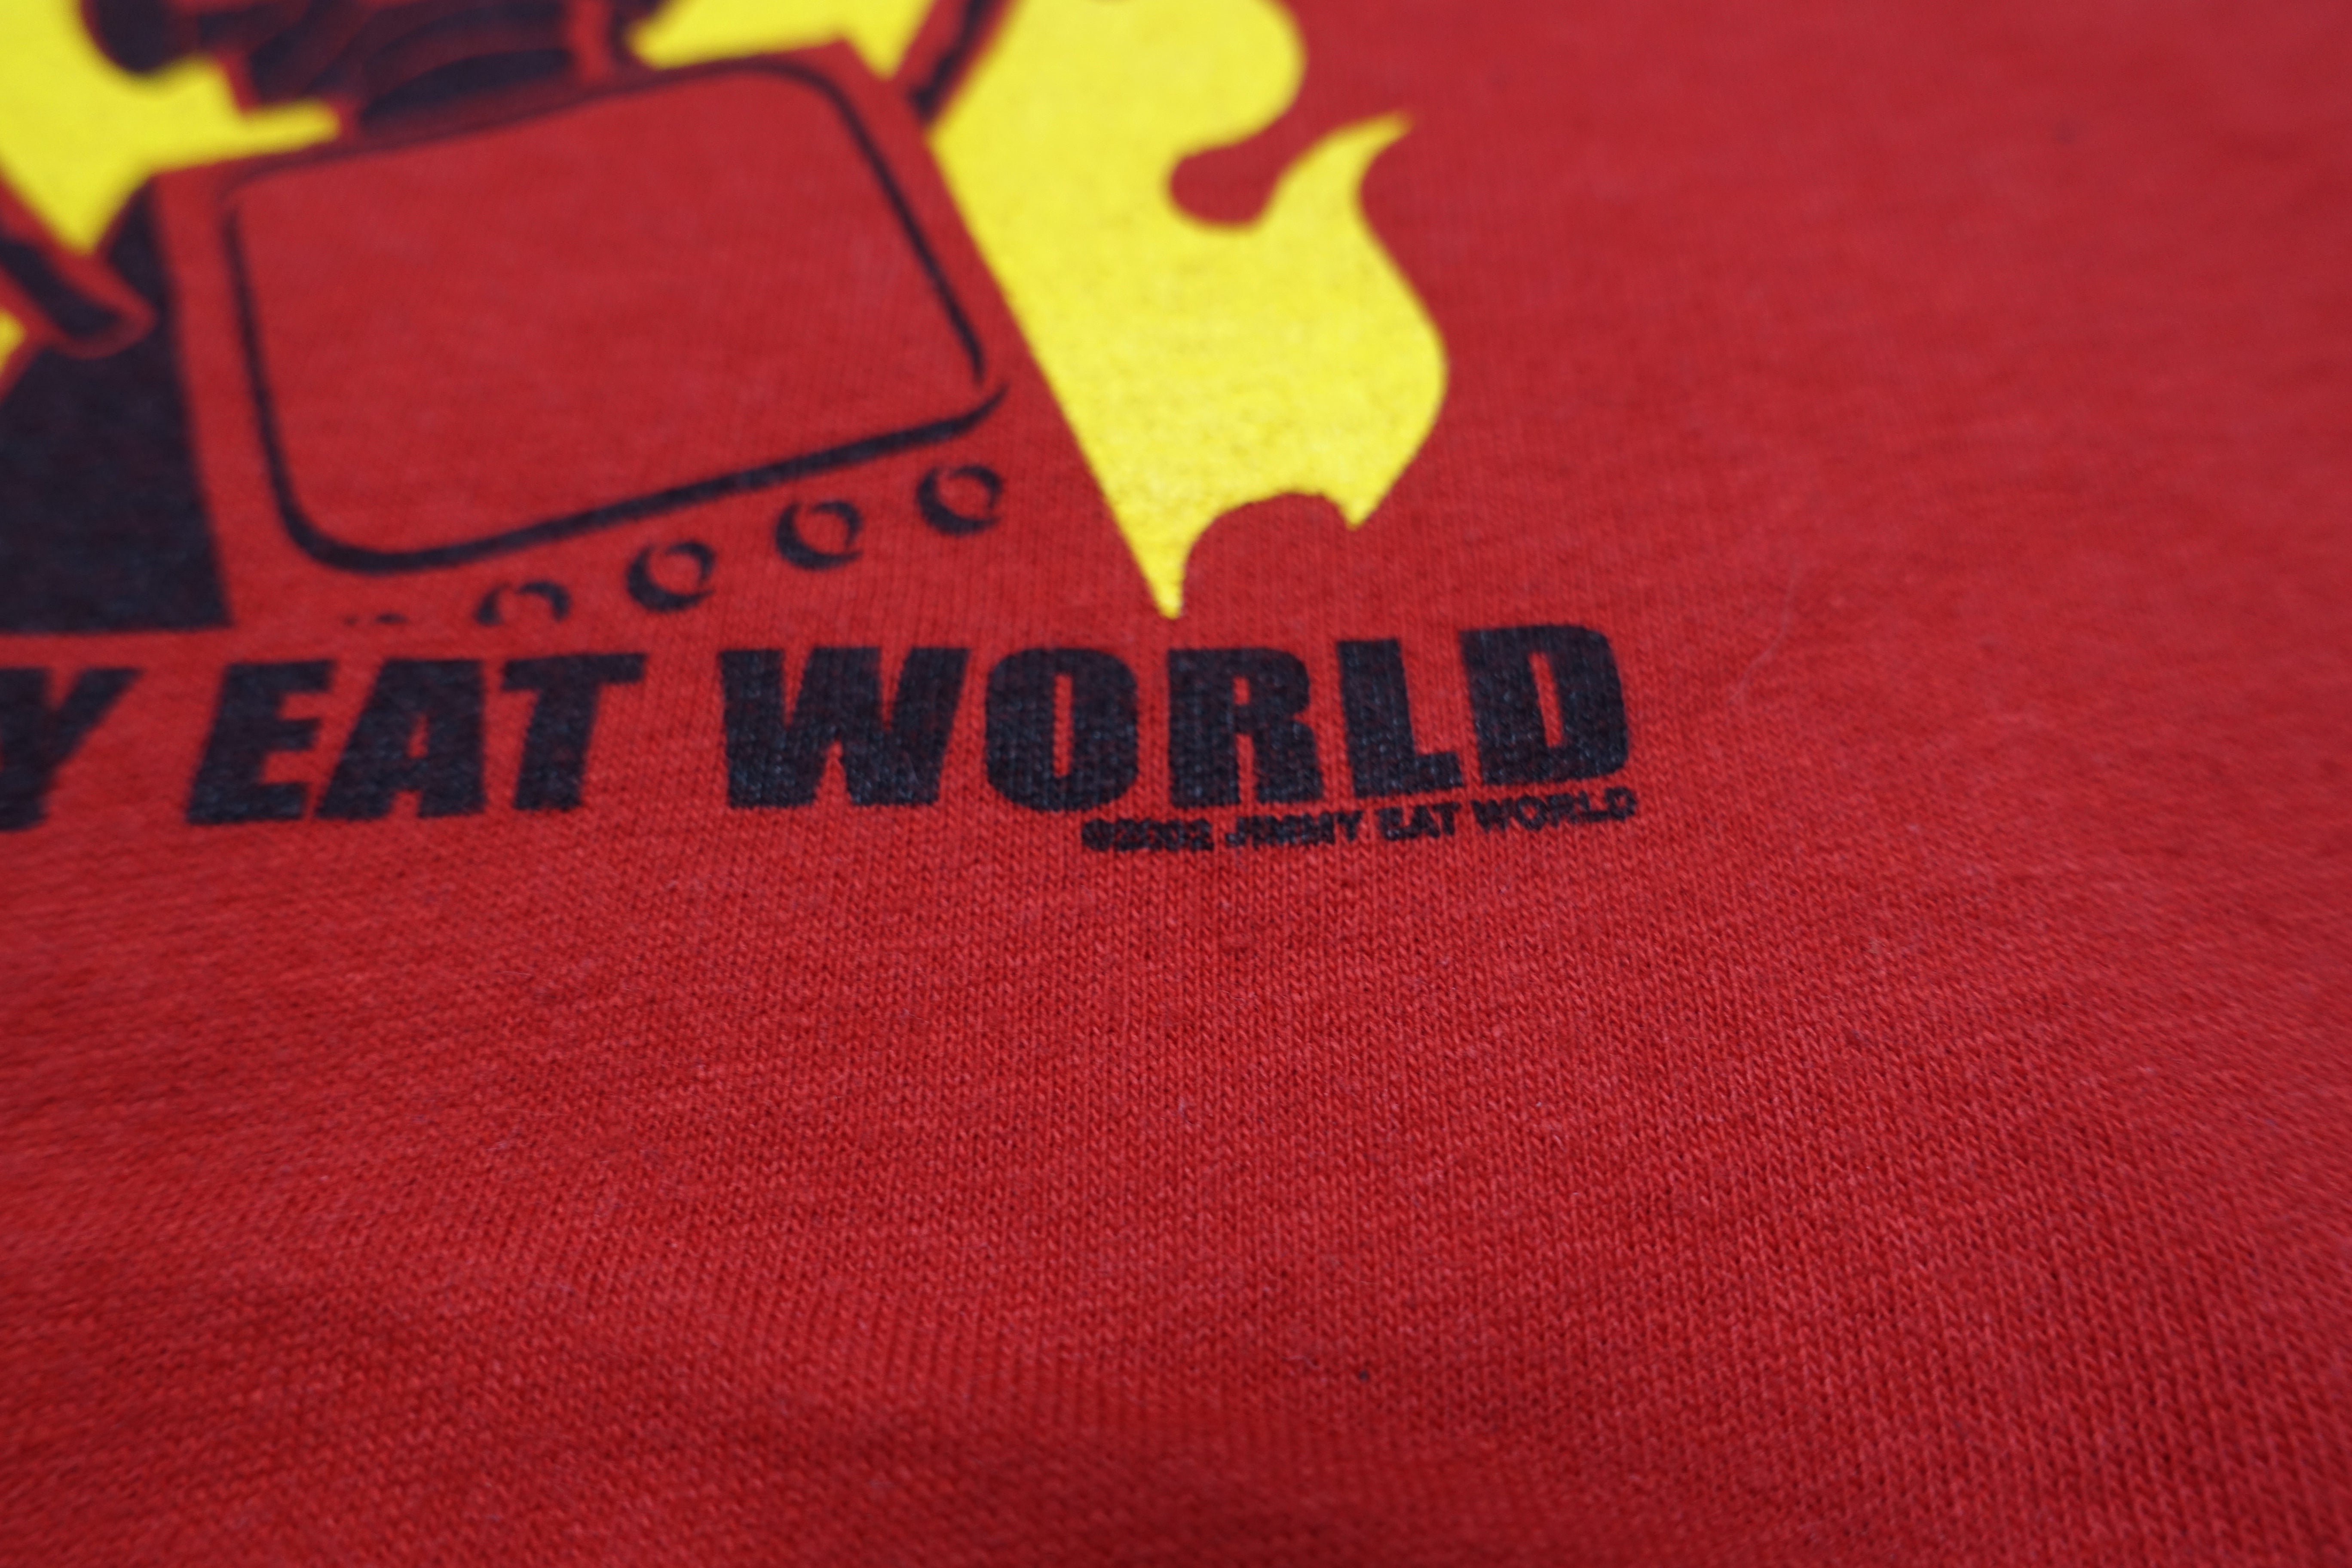 Jimmy Eat World - Flaming Robot USA 2002 Tour Shirt Size Large